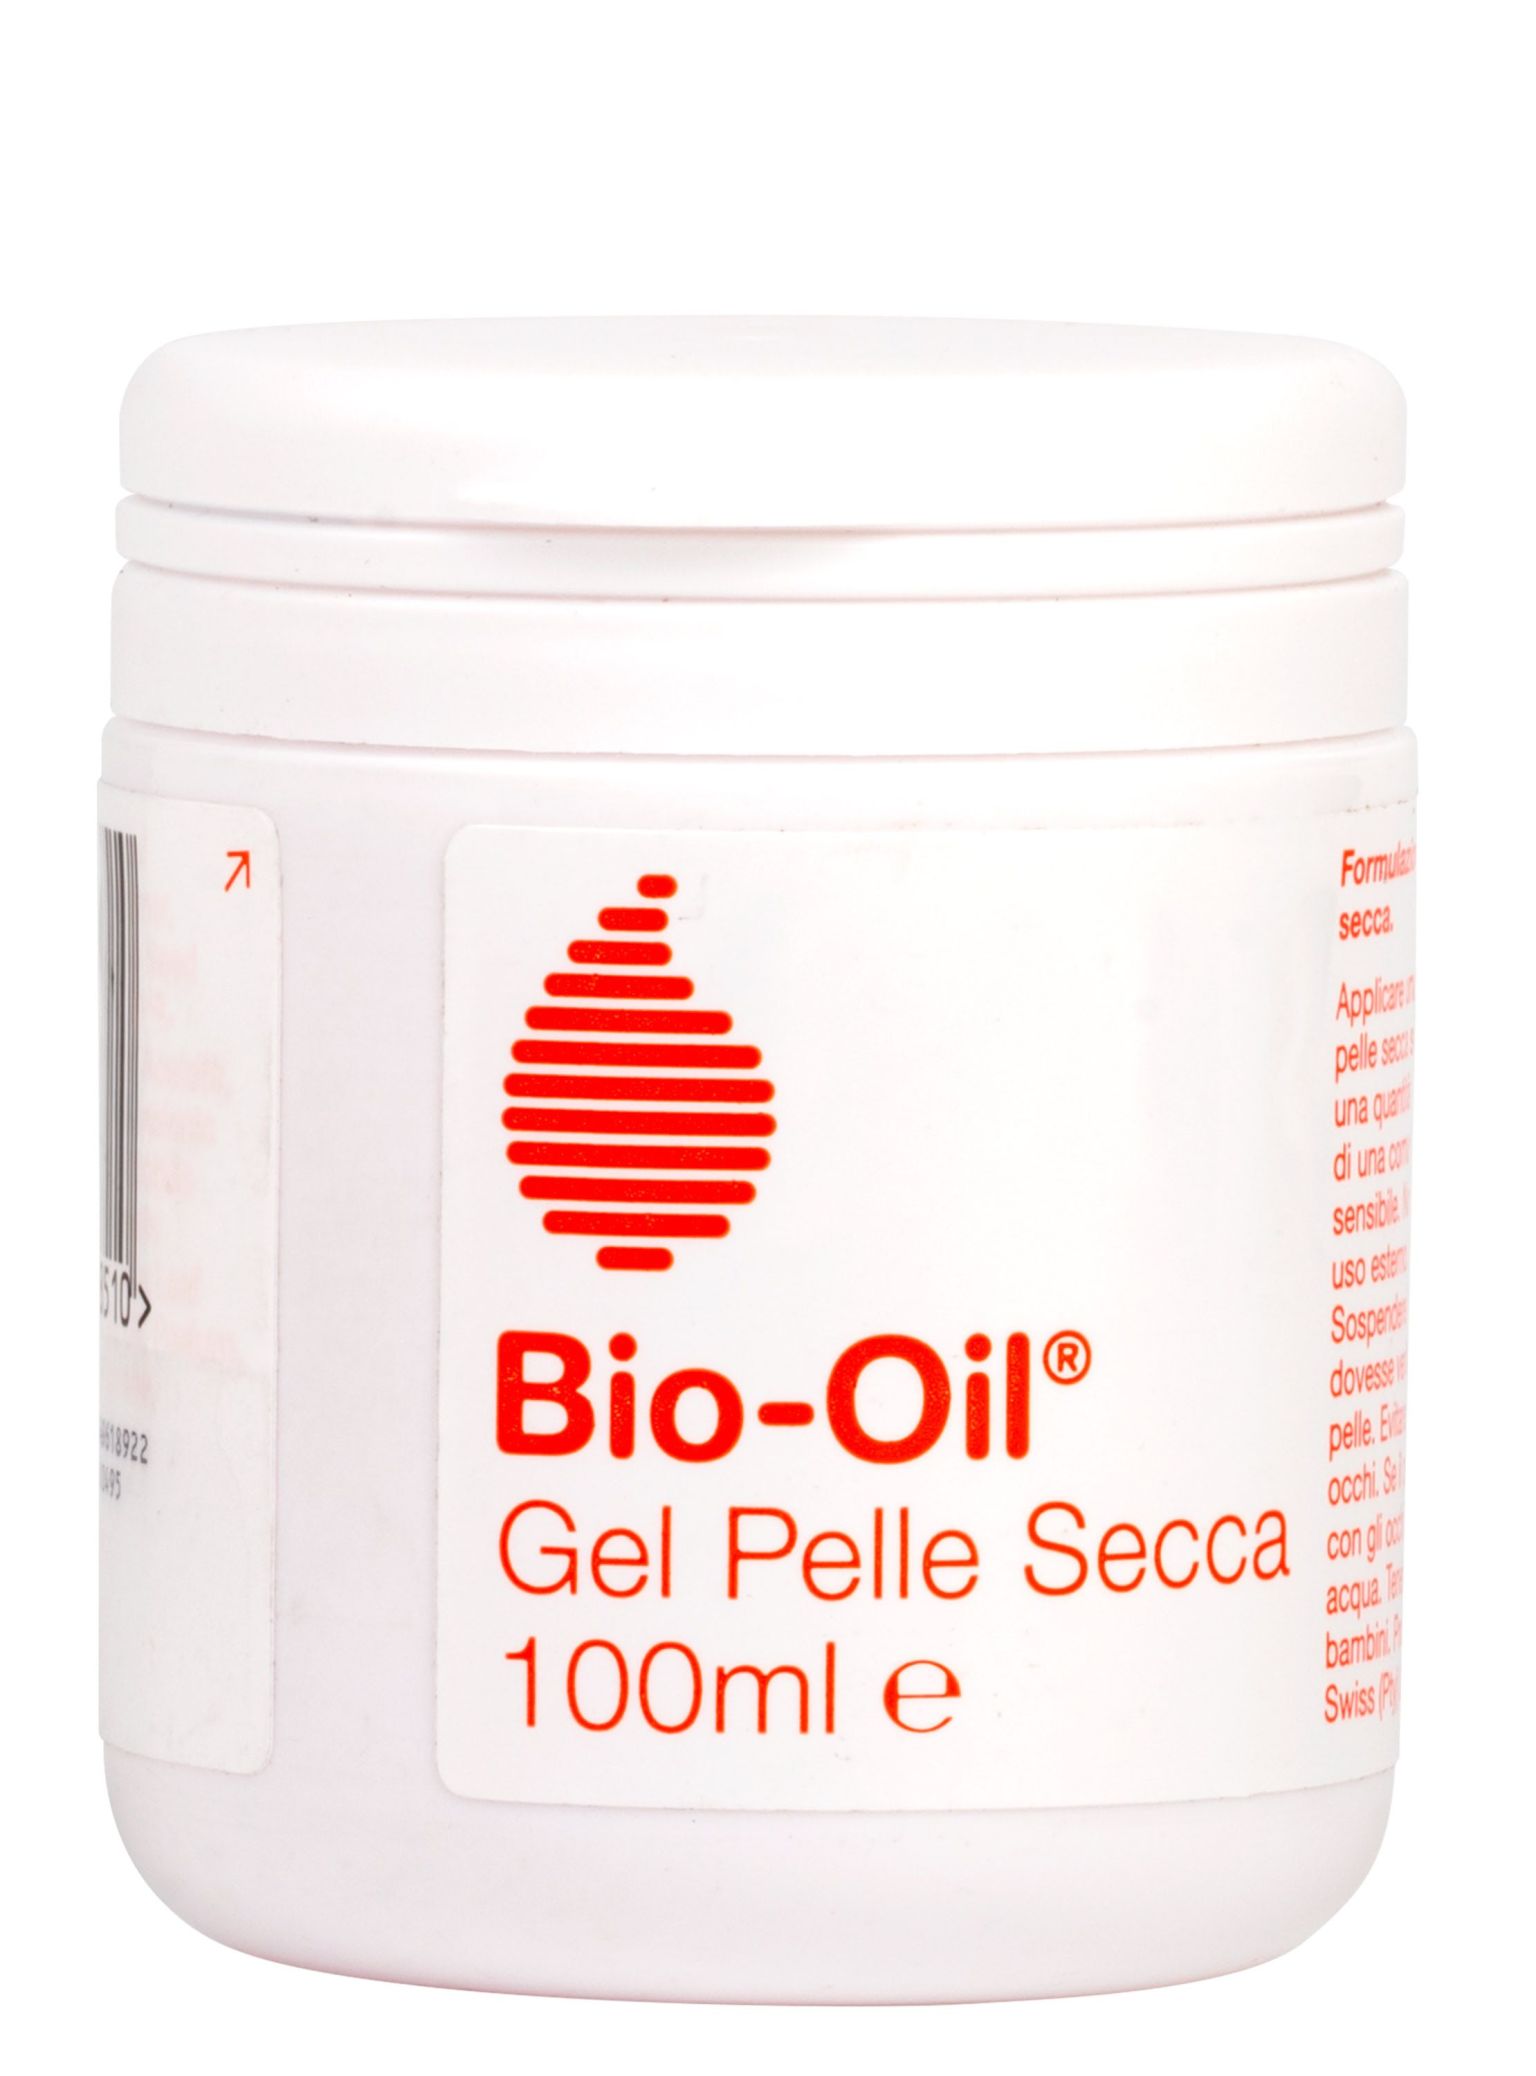 975431976 - Bio-Oil Gel Pelle Secca 100ml - 7892654_2.jpg